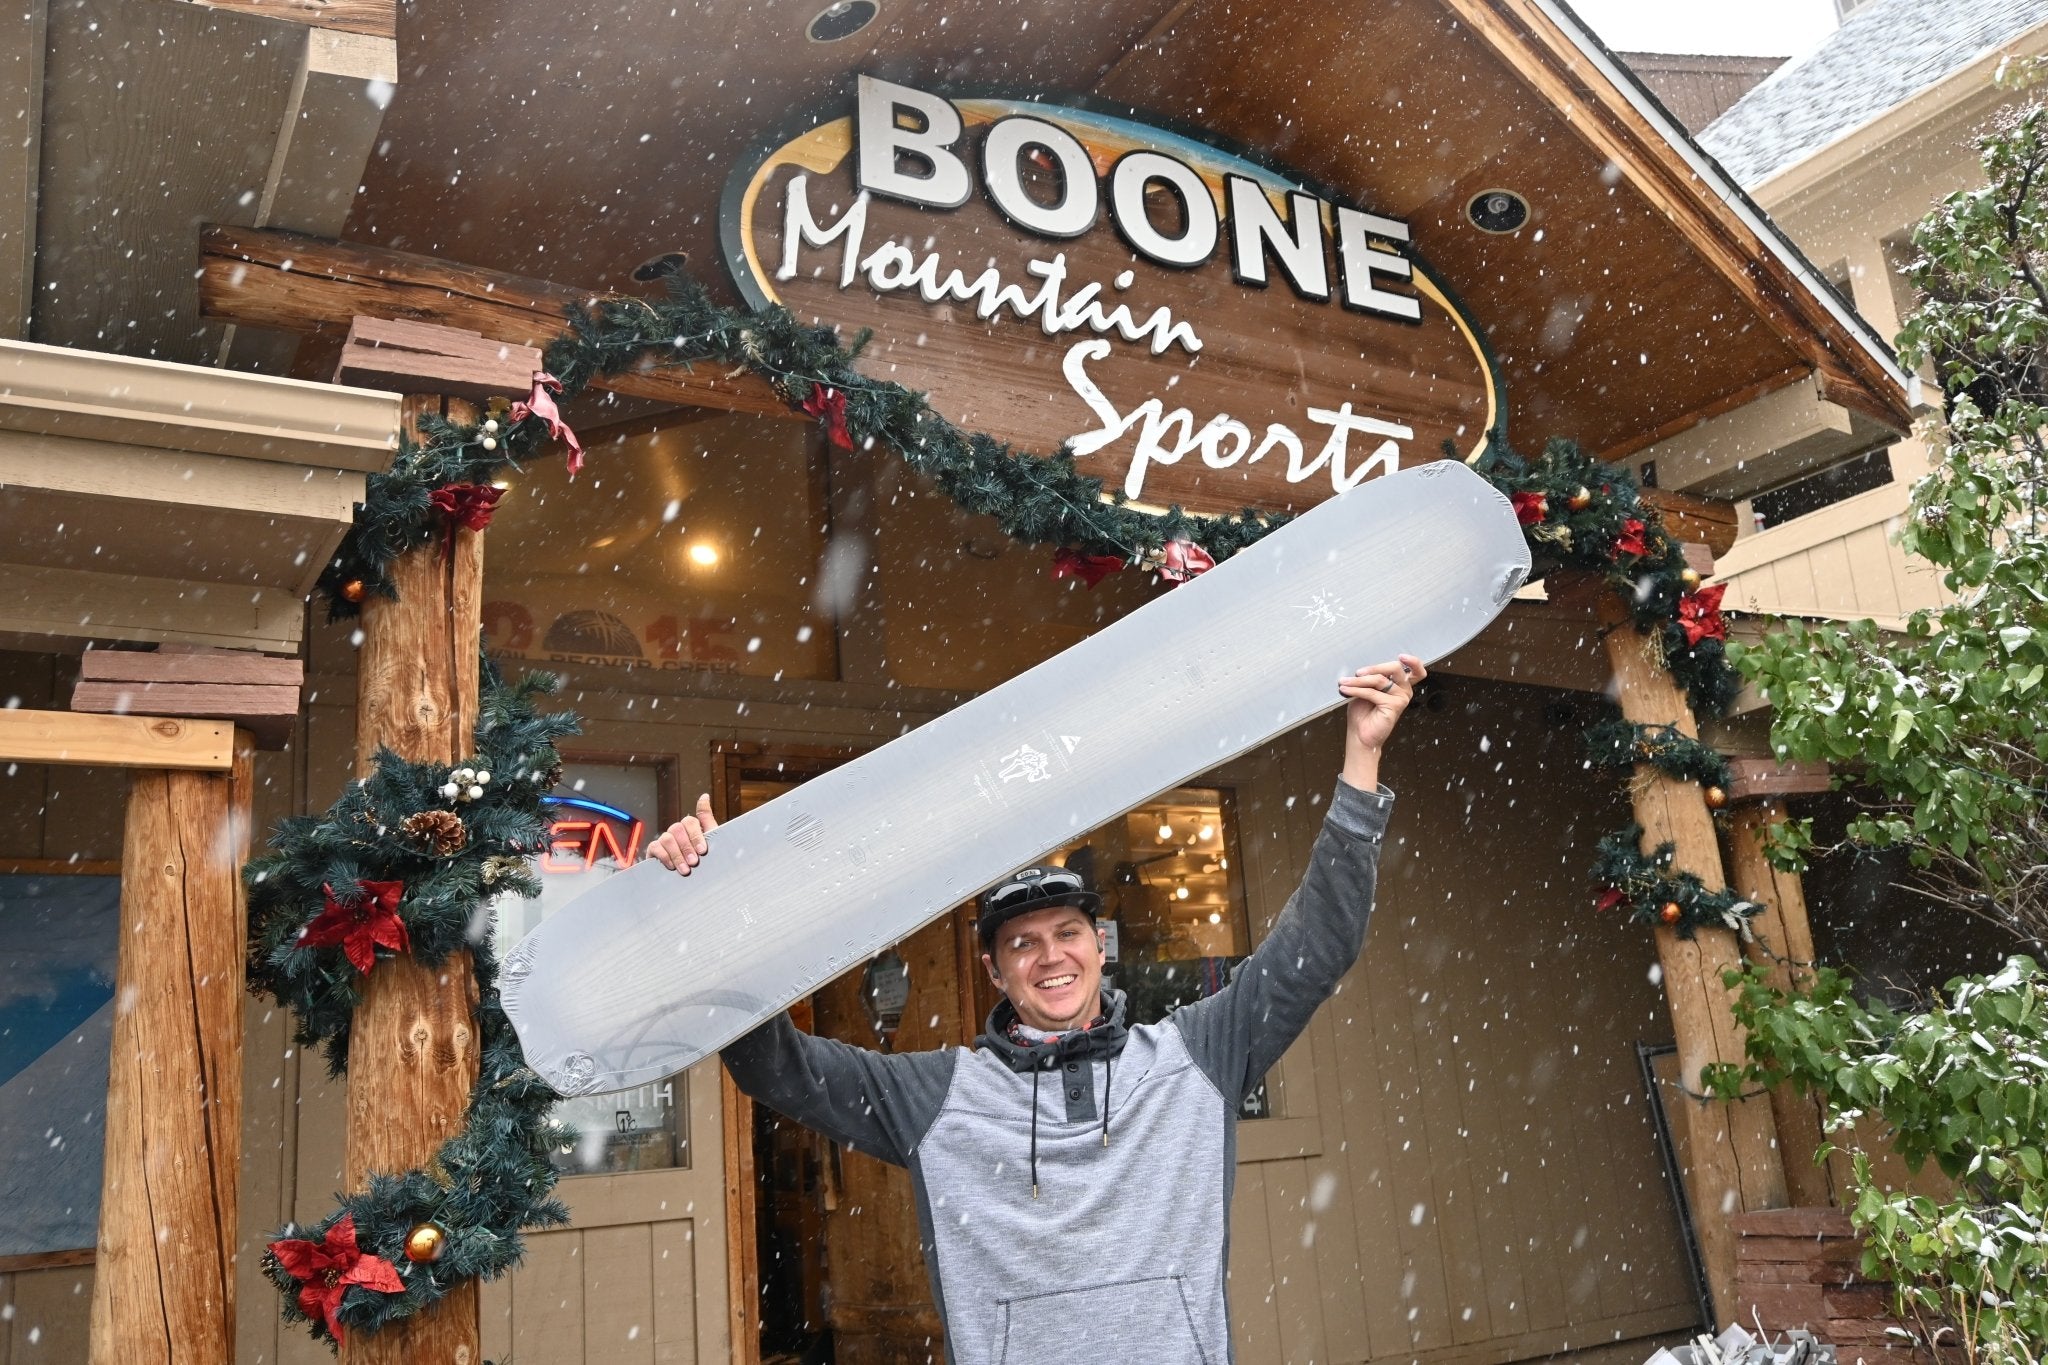 Poles – Boone Mountain Sports